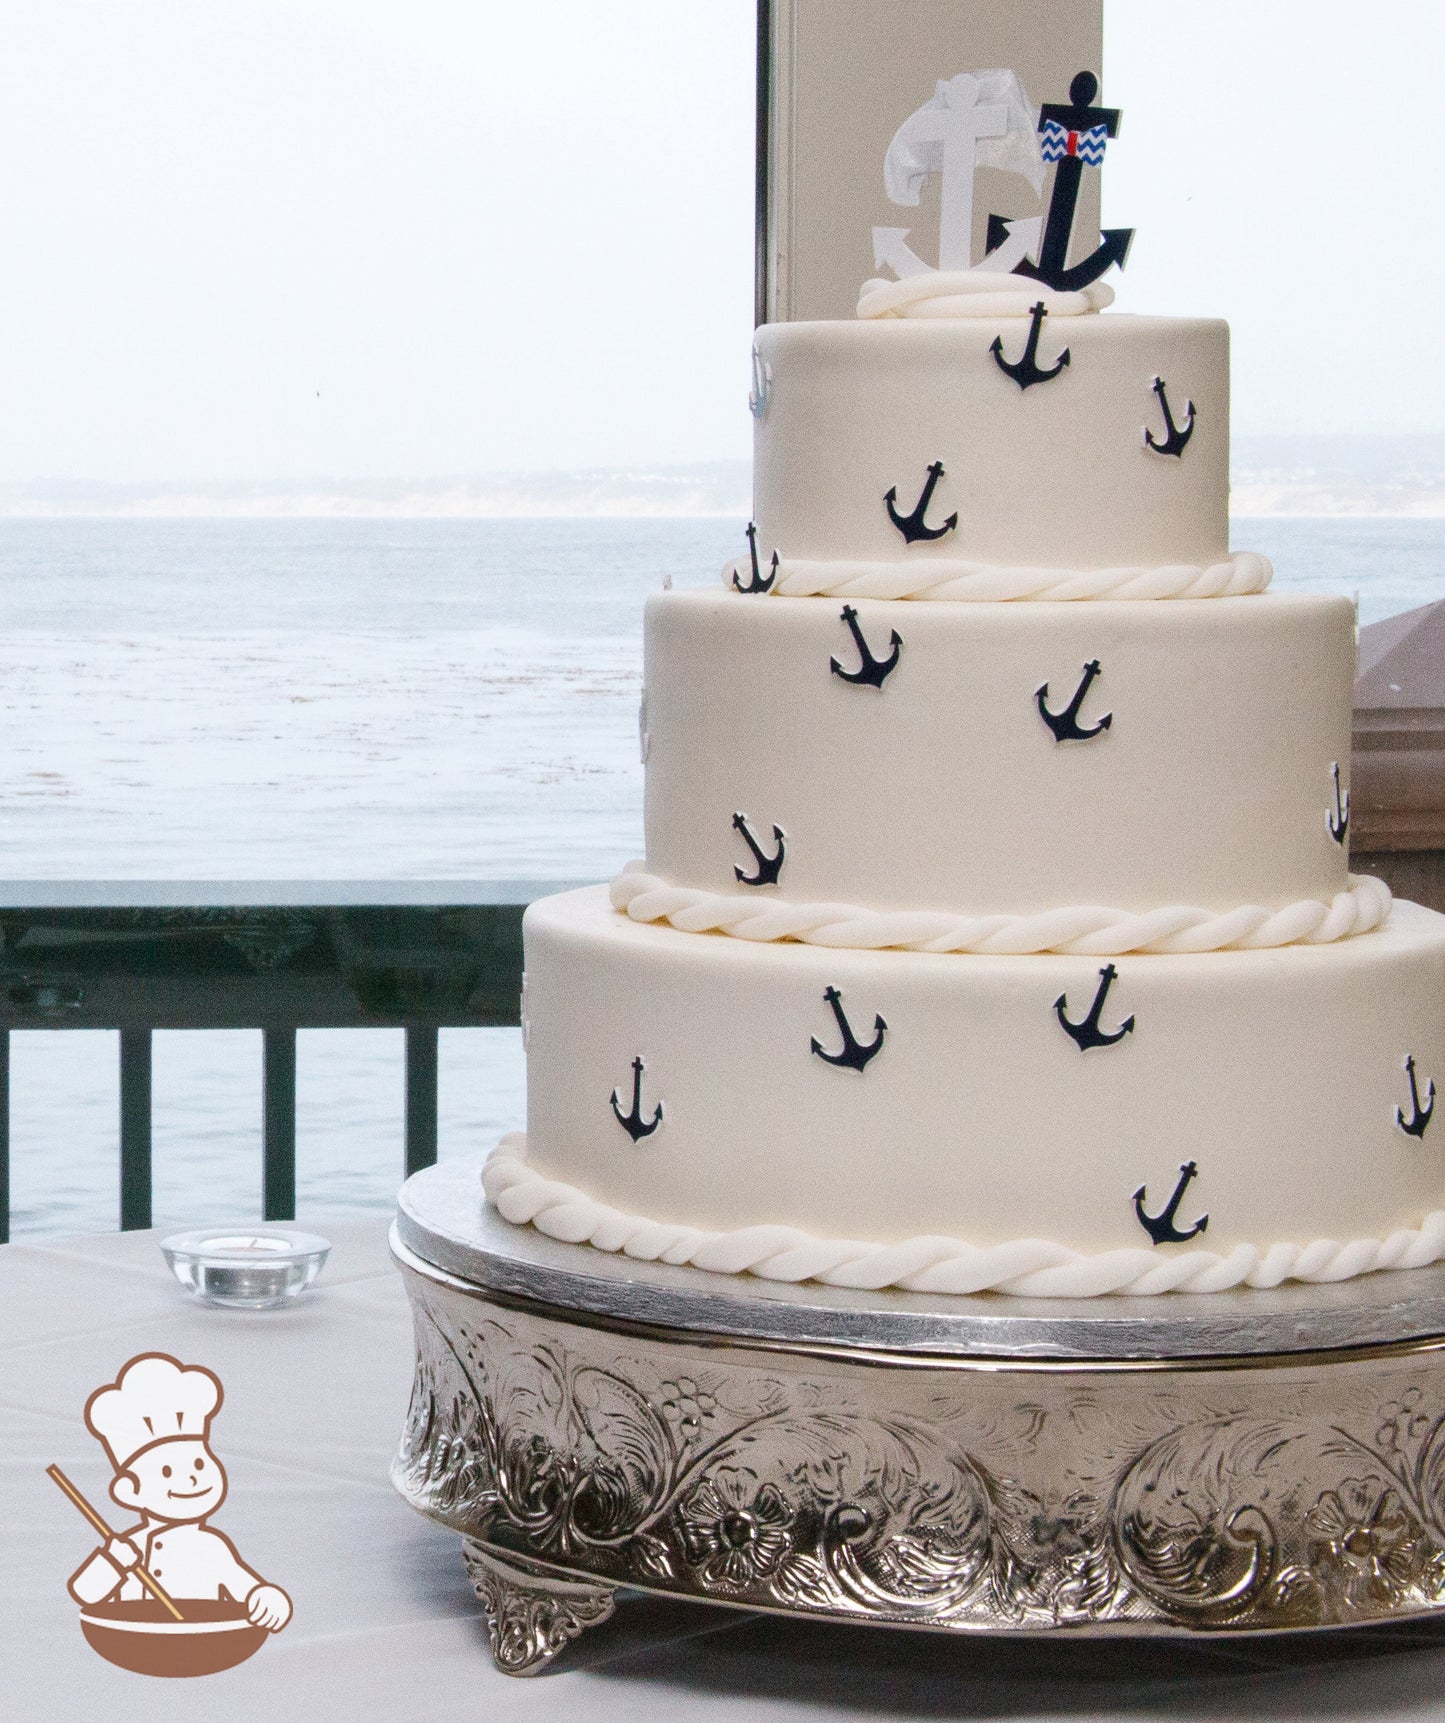 Nautical themed cake set against ocean background.